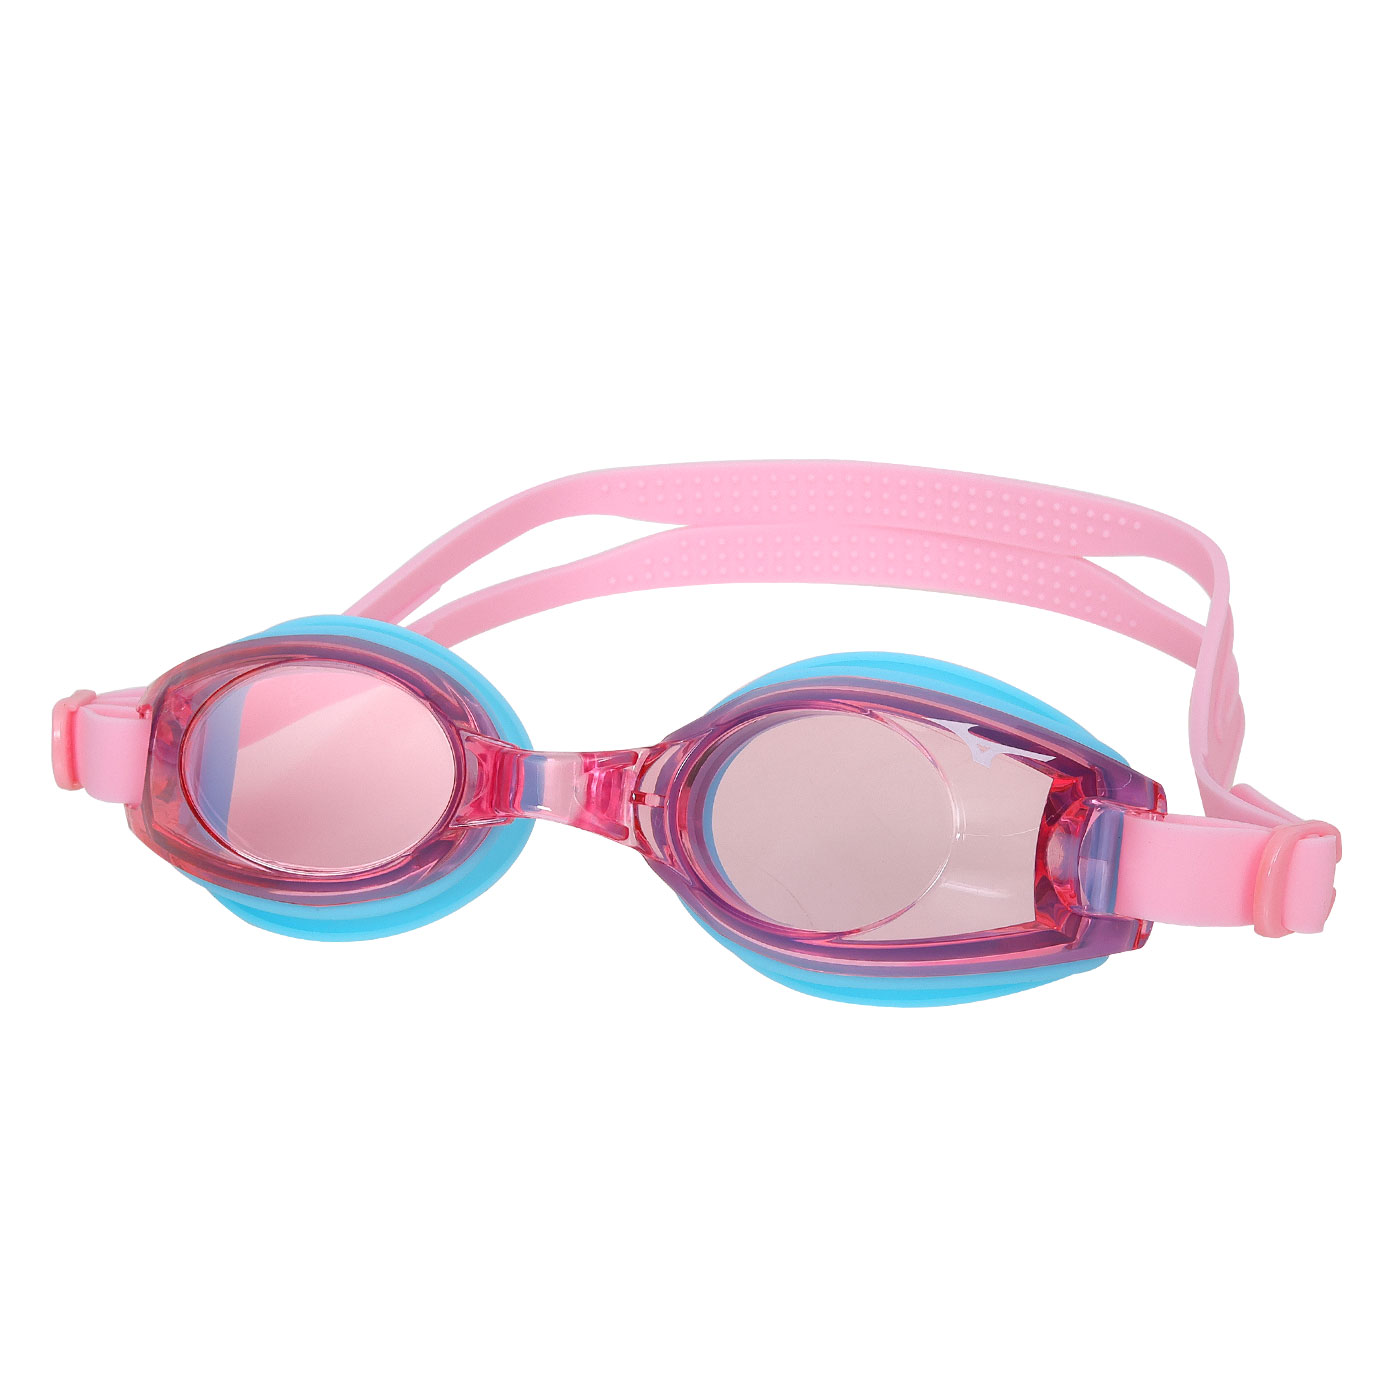 MIZUNO 兒童泳鏡  SWIM N3TFB59500-63 - 桃紅水藍